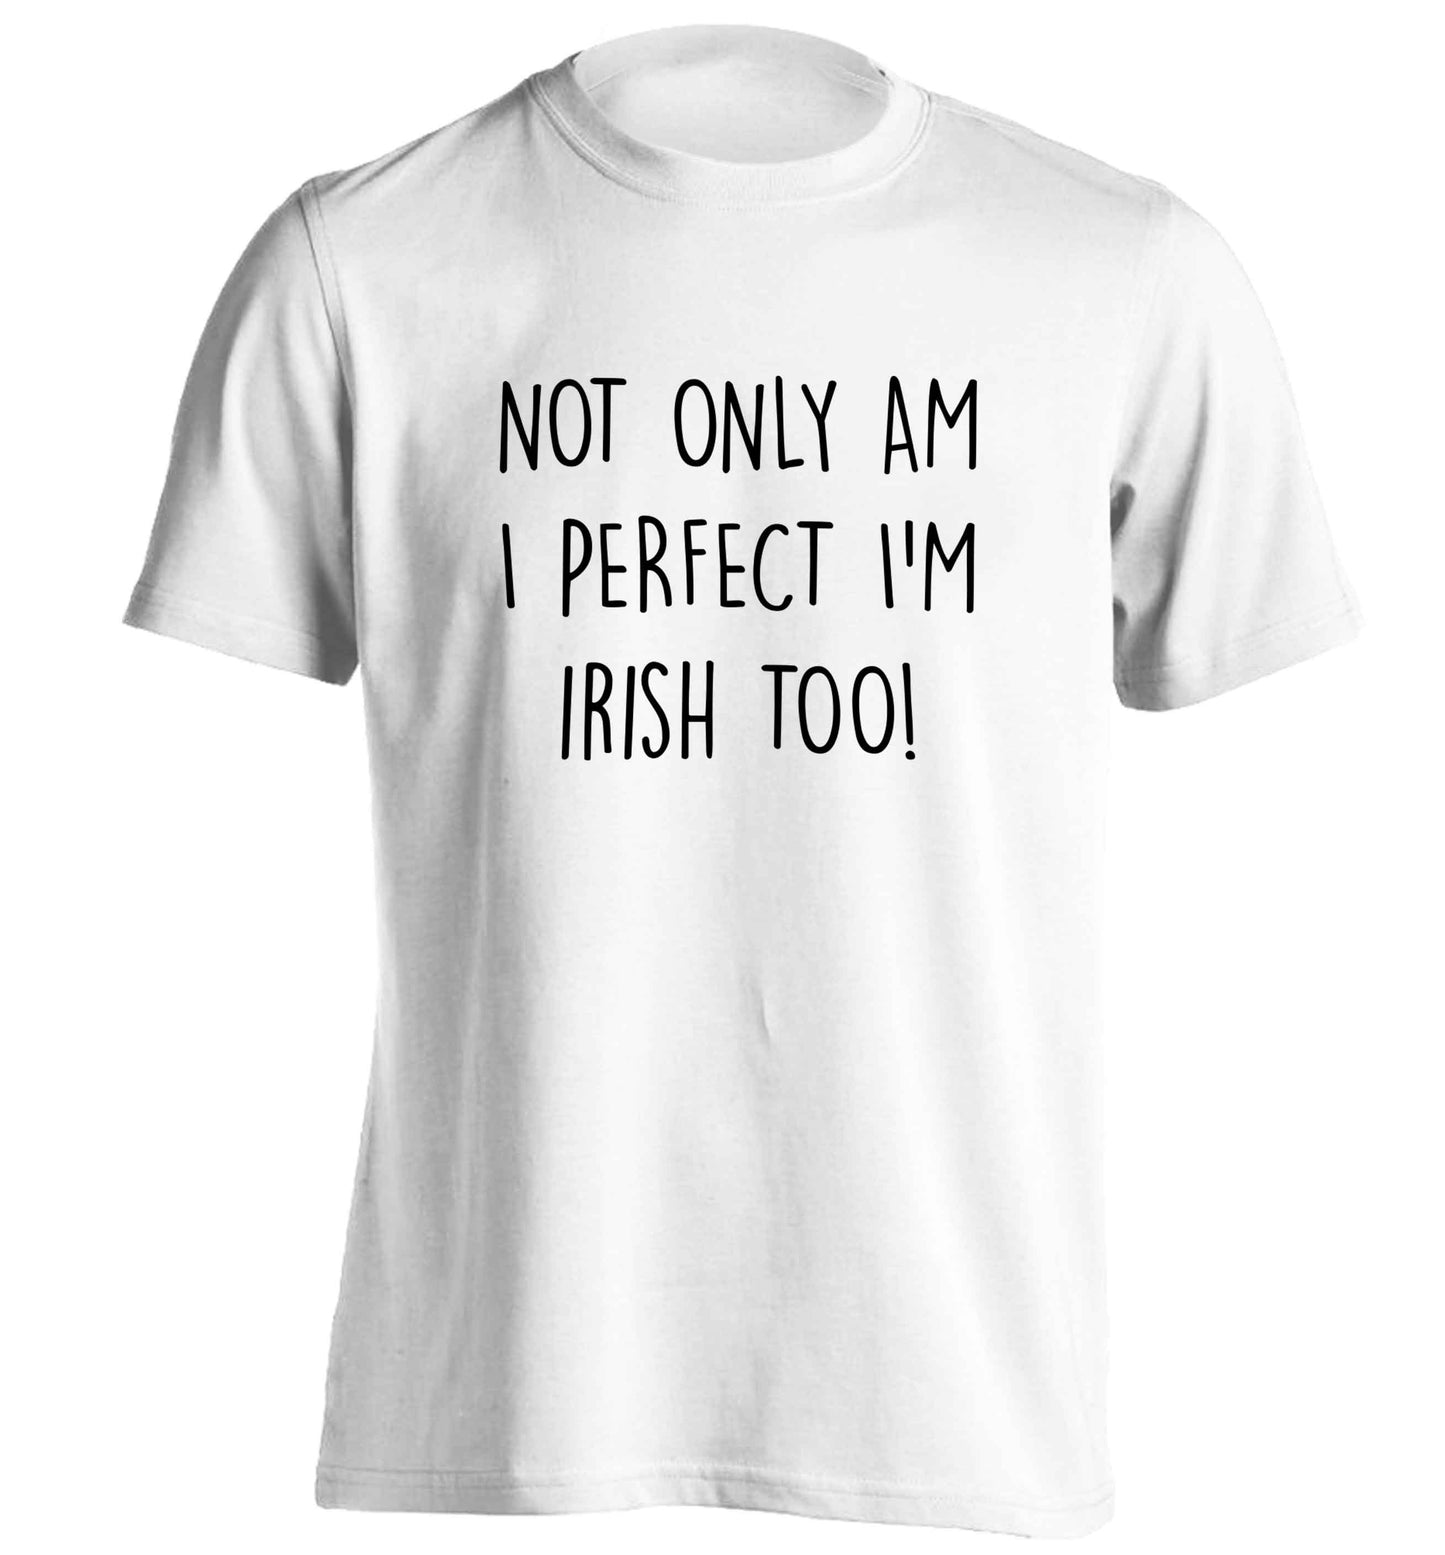 Not only am I perfect I'm Irish too! adults unisex white Tshirt 2XL